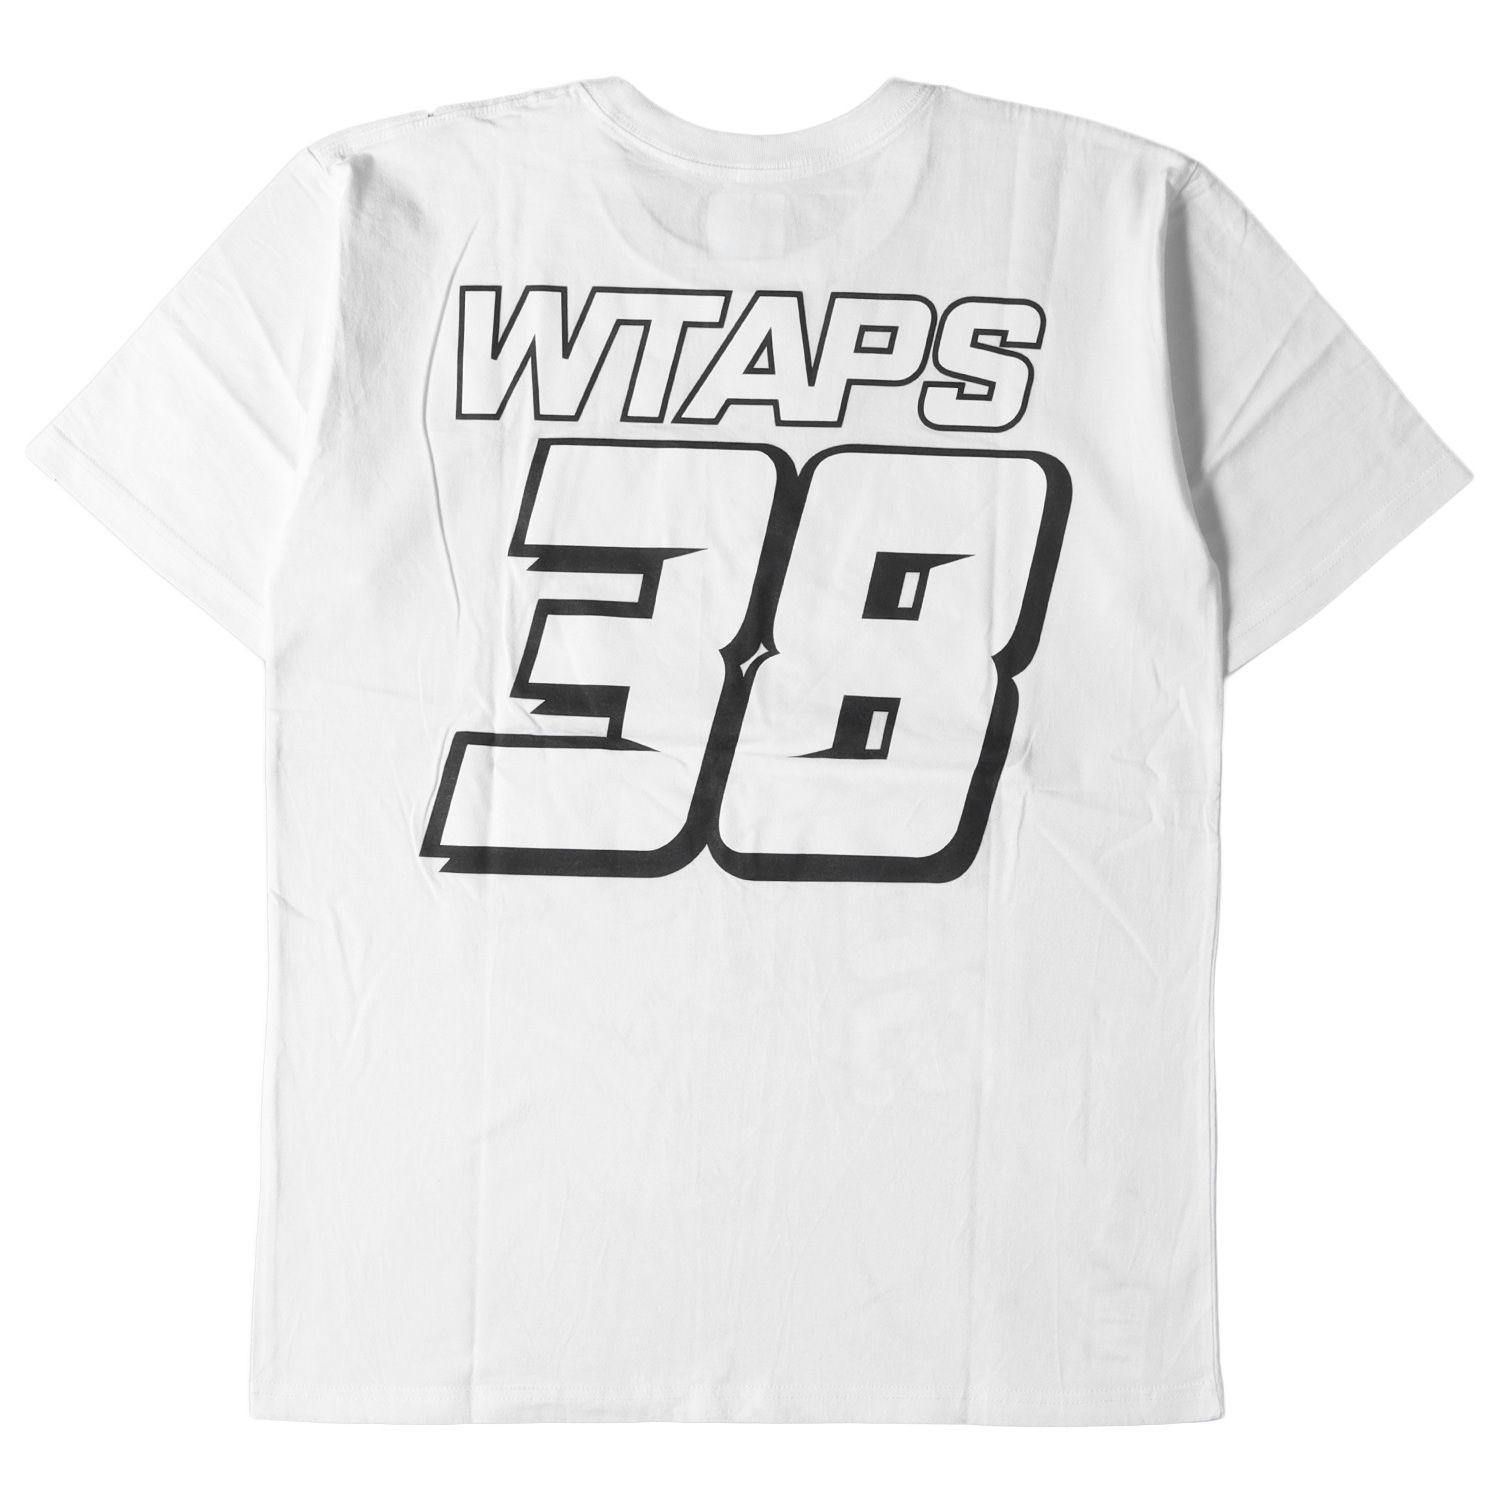 20SS WTAPS FLAMES Tシャツ BLACK Lサイズ